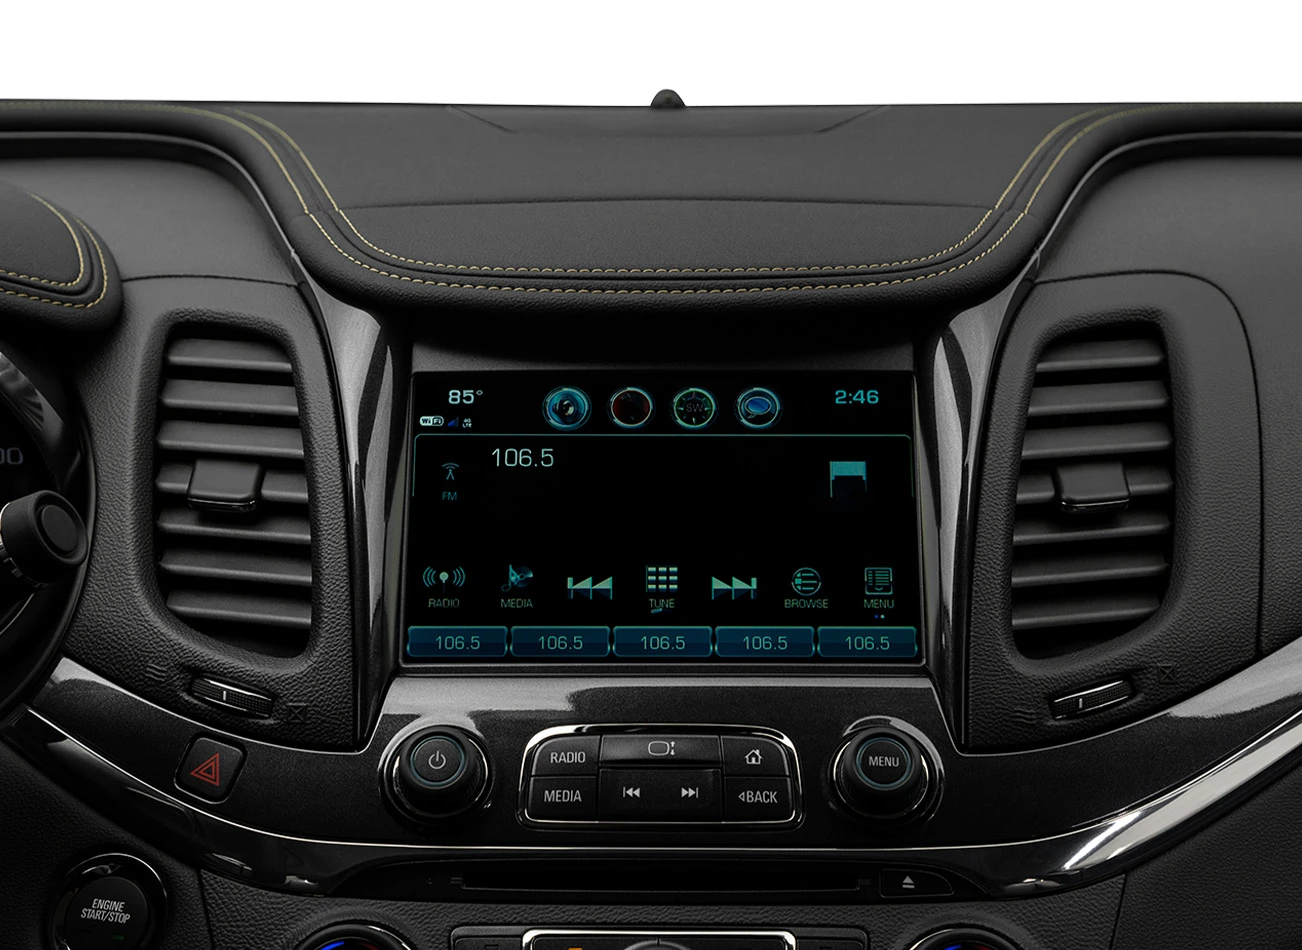 2020 Chevrolet Impala Review: Entertainment display | CarMax